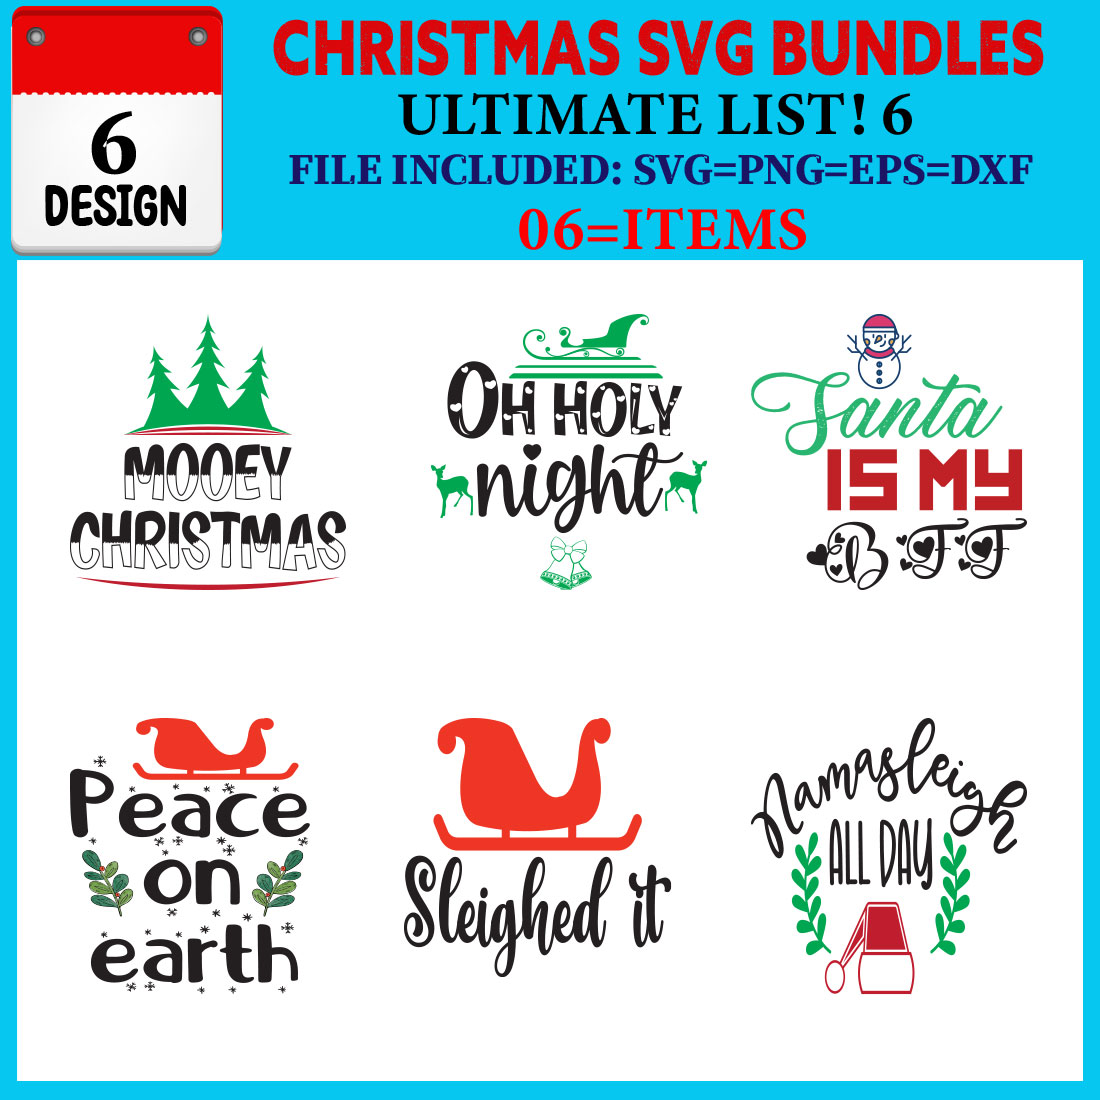 Christmas T-shirt Design Bundle Vol-35 cover image.